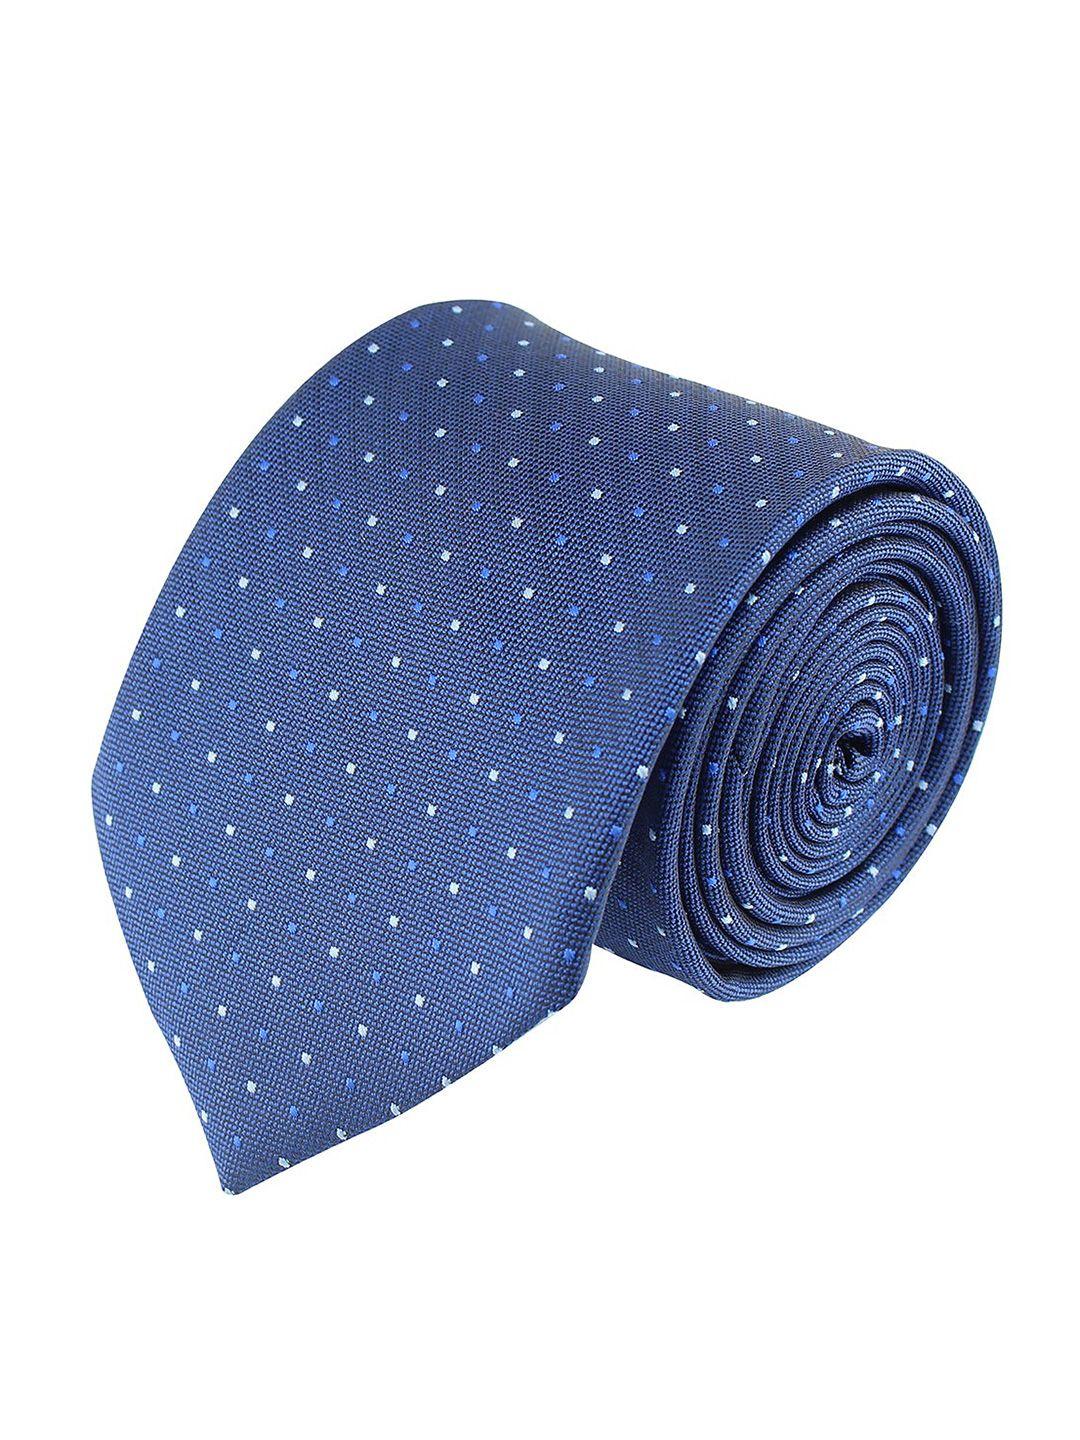 kovove men blue & white the refreshing twin polka dot woven design broad tie